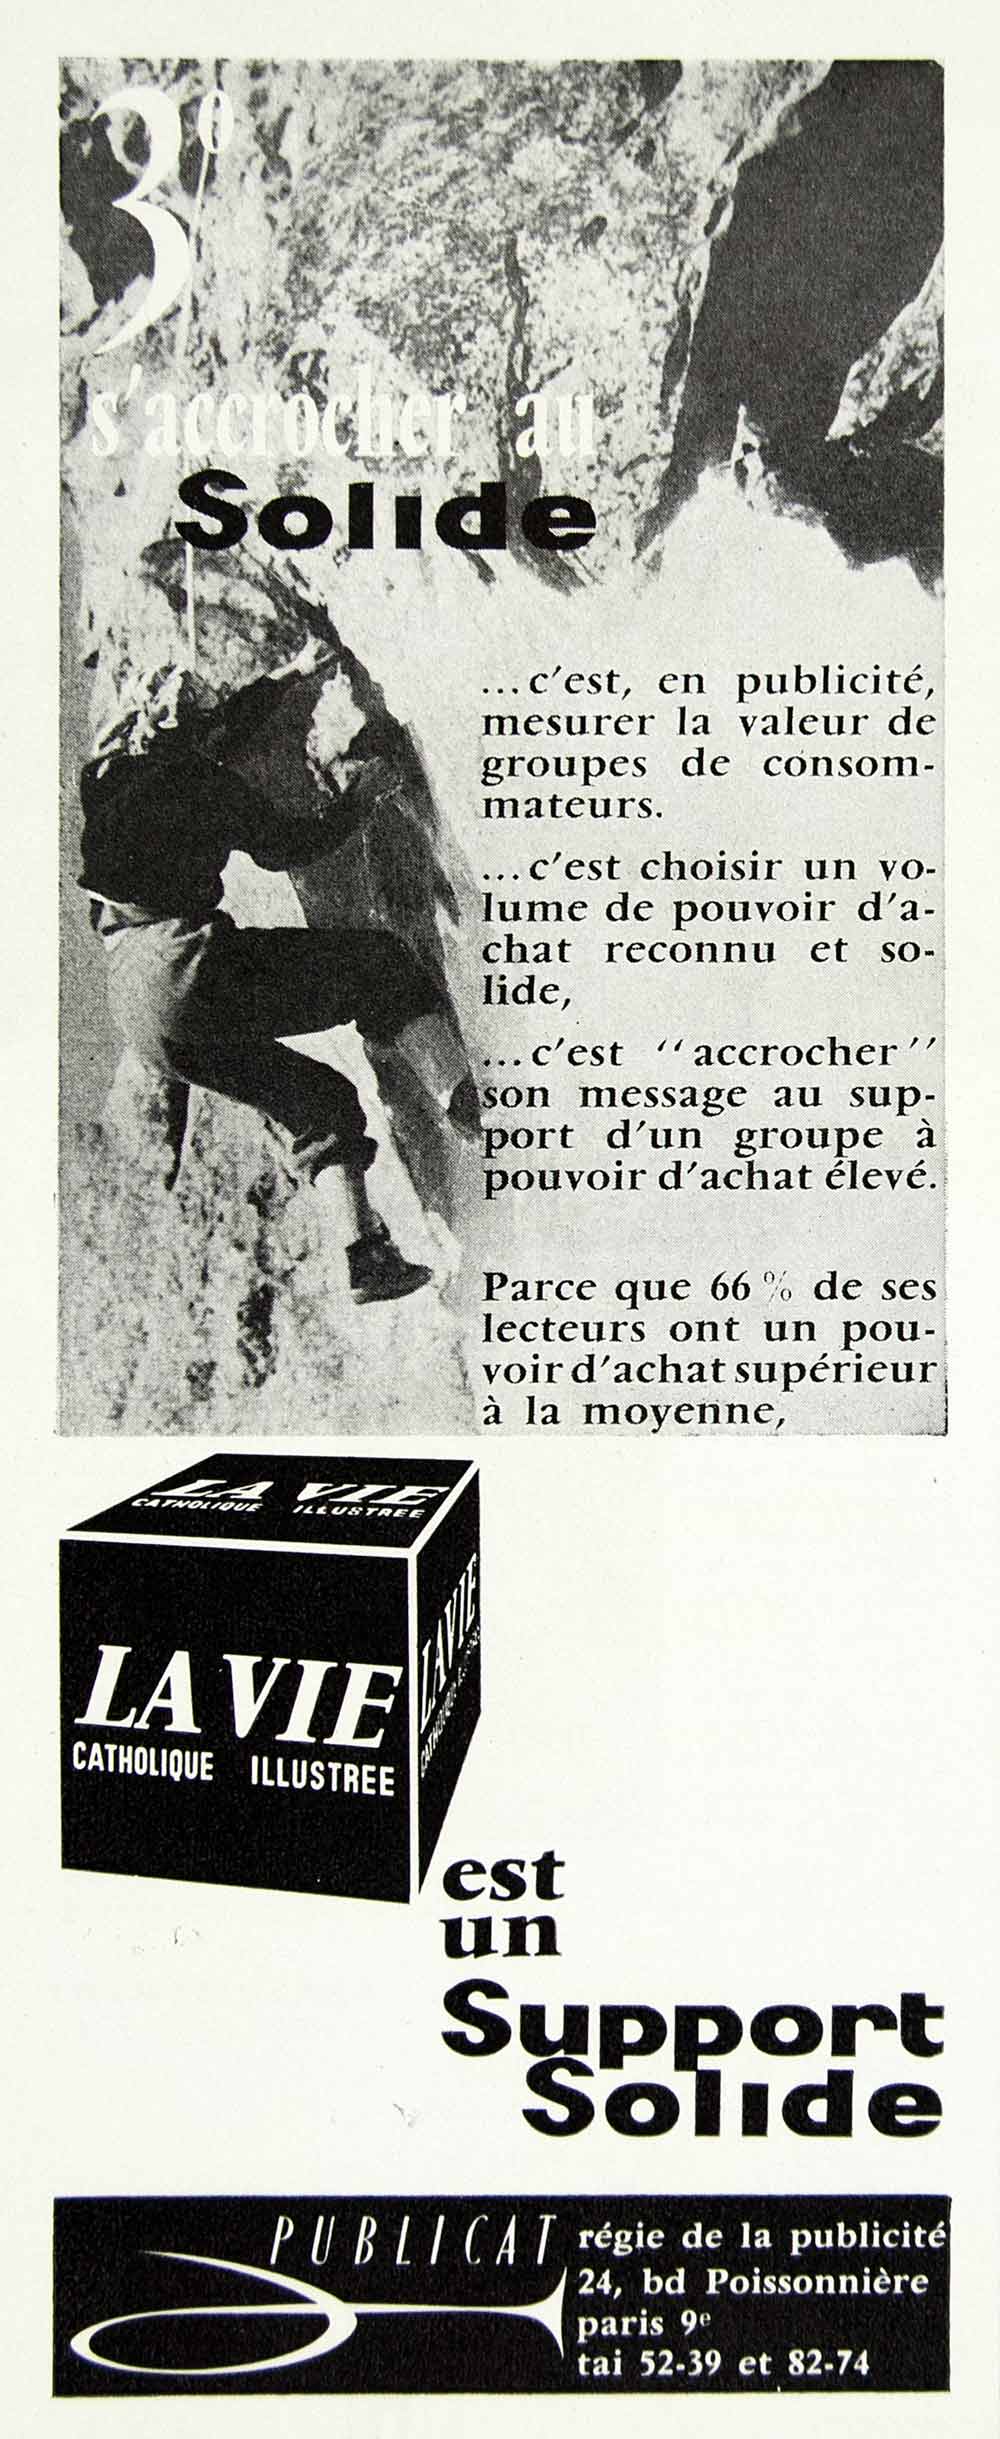 1957 Ad La Vie Catholique Illustree French Religious Catholic Rock Climbing VEN1